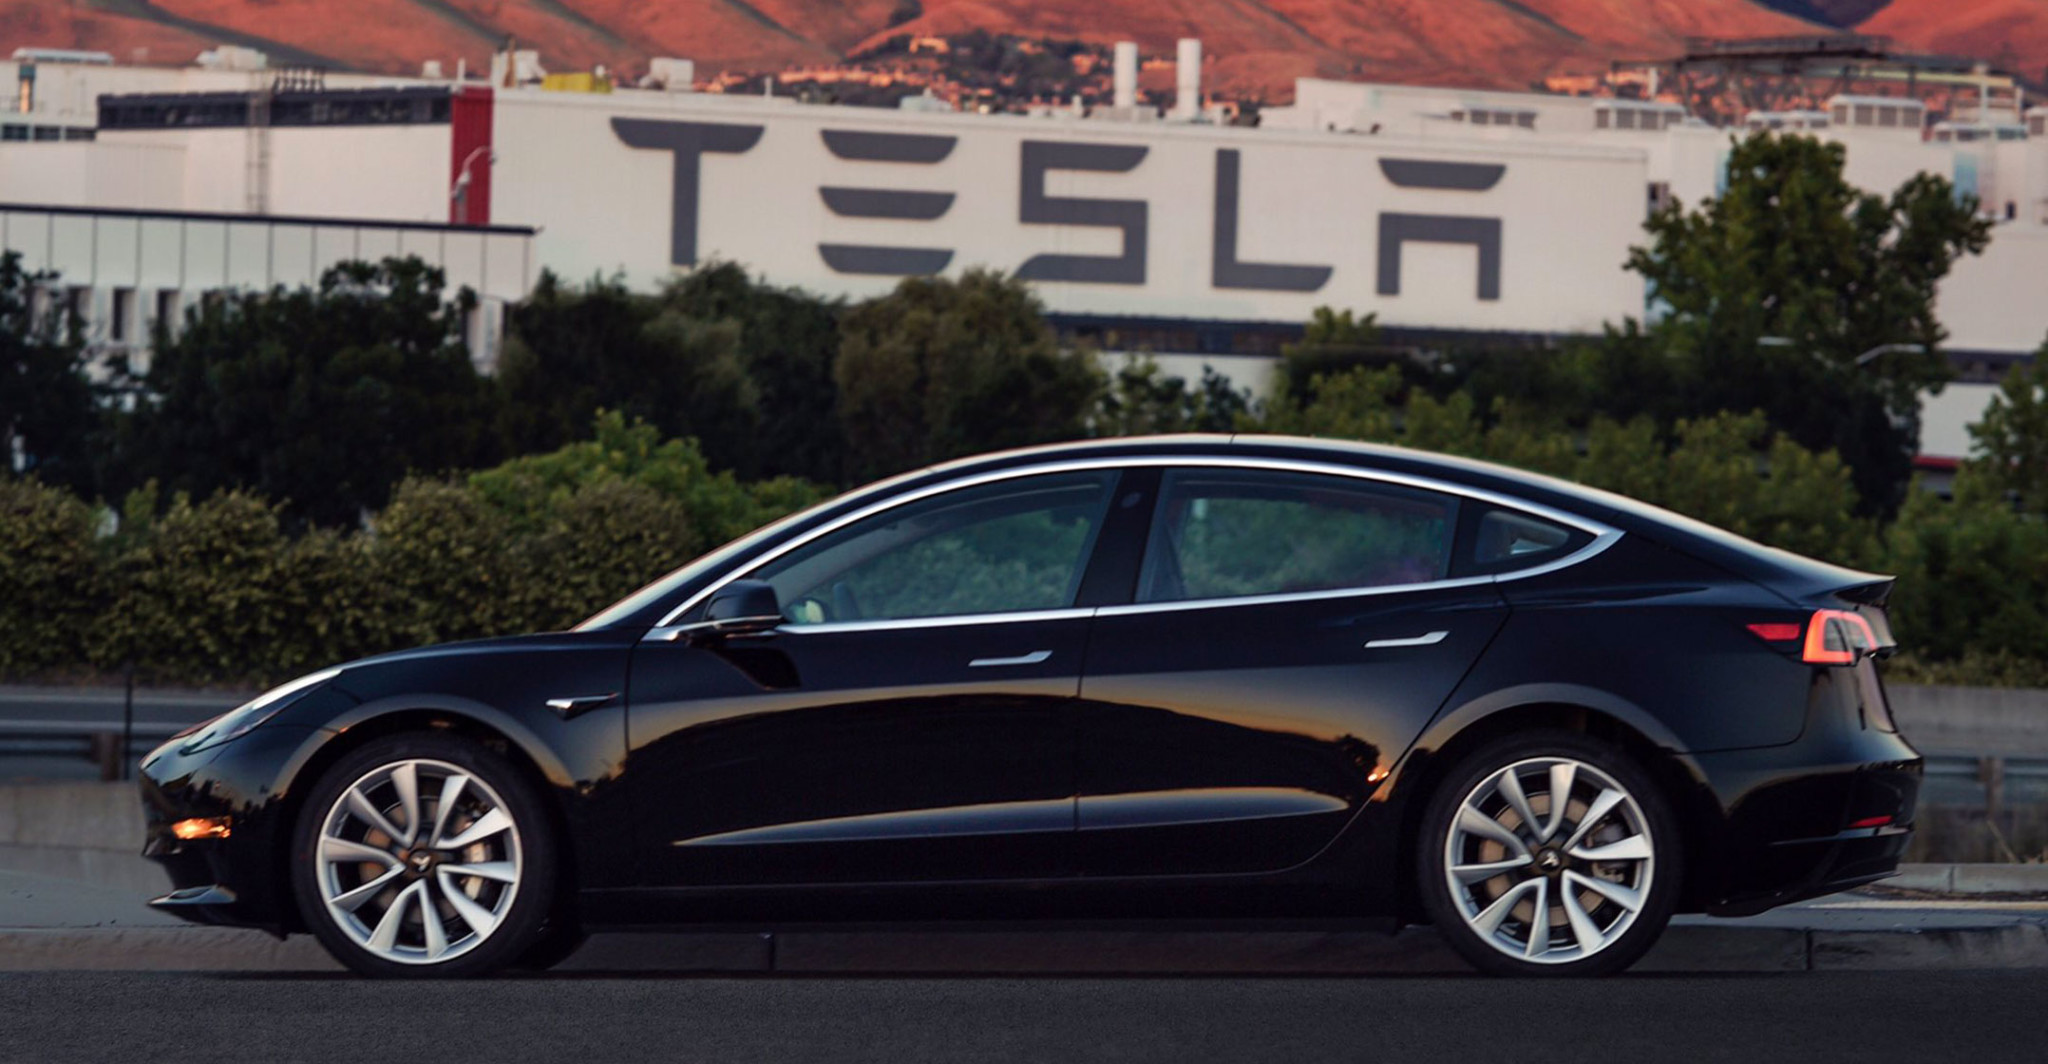 Tesla euphoria powers equity boom for electric imitators - TechCentral